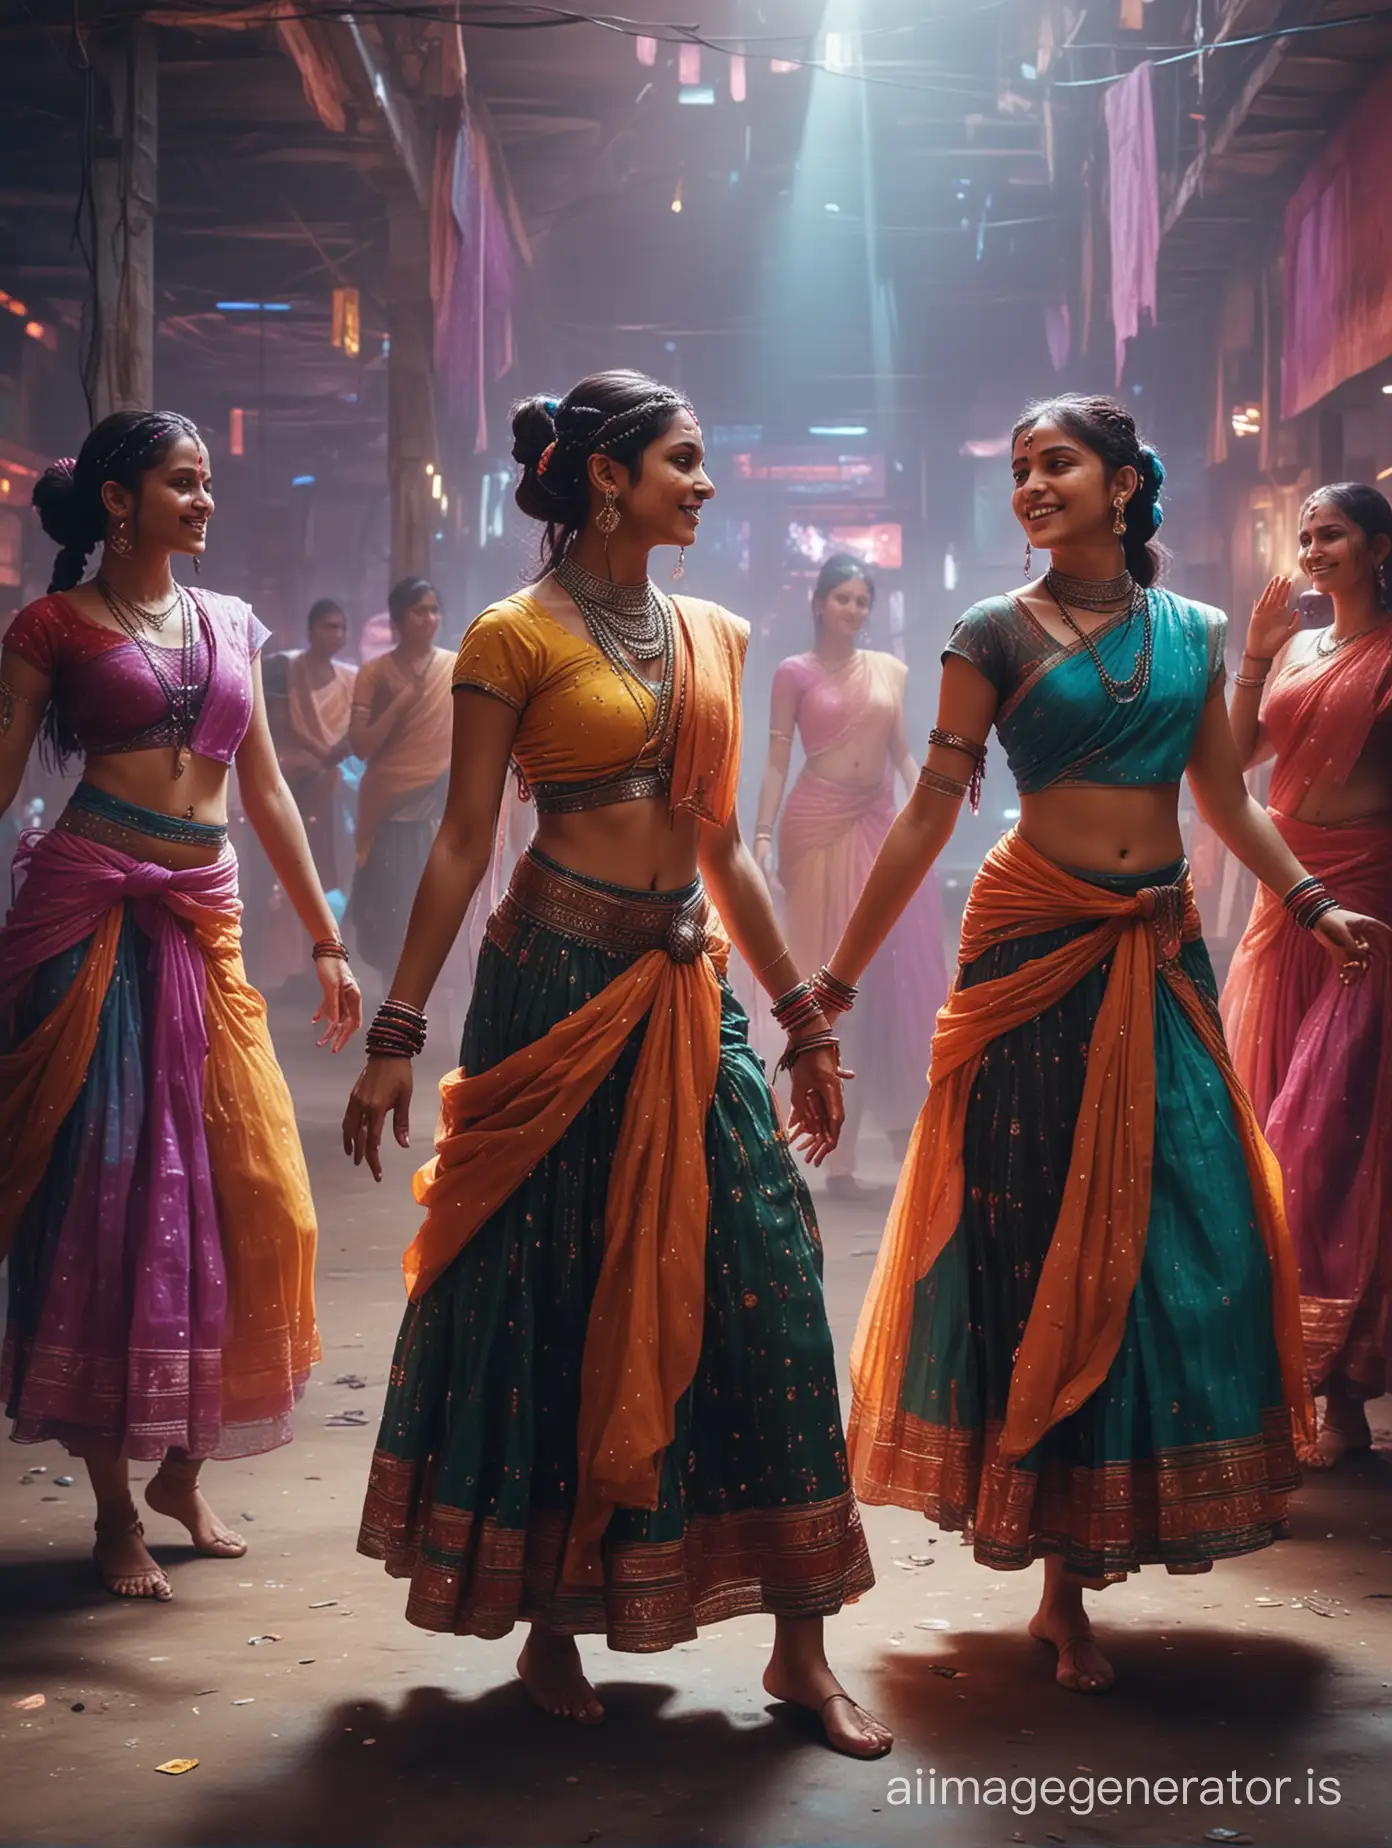 Vibrant-Cyberpunk-Future-Indian-Girls-Dancing-in-Traditional-Attire-Amidst-a-Flourishing-Cityscape